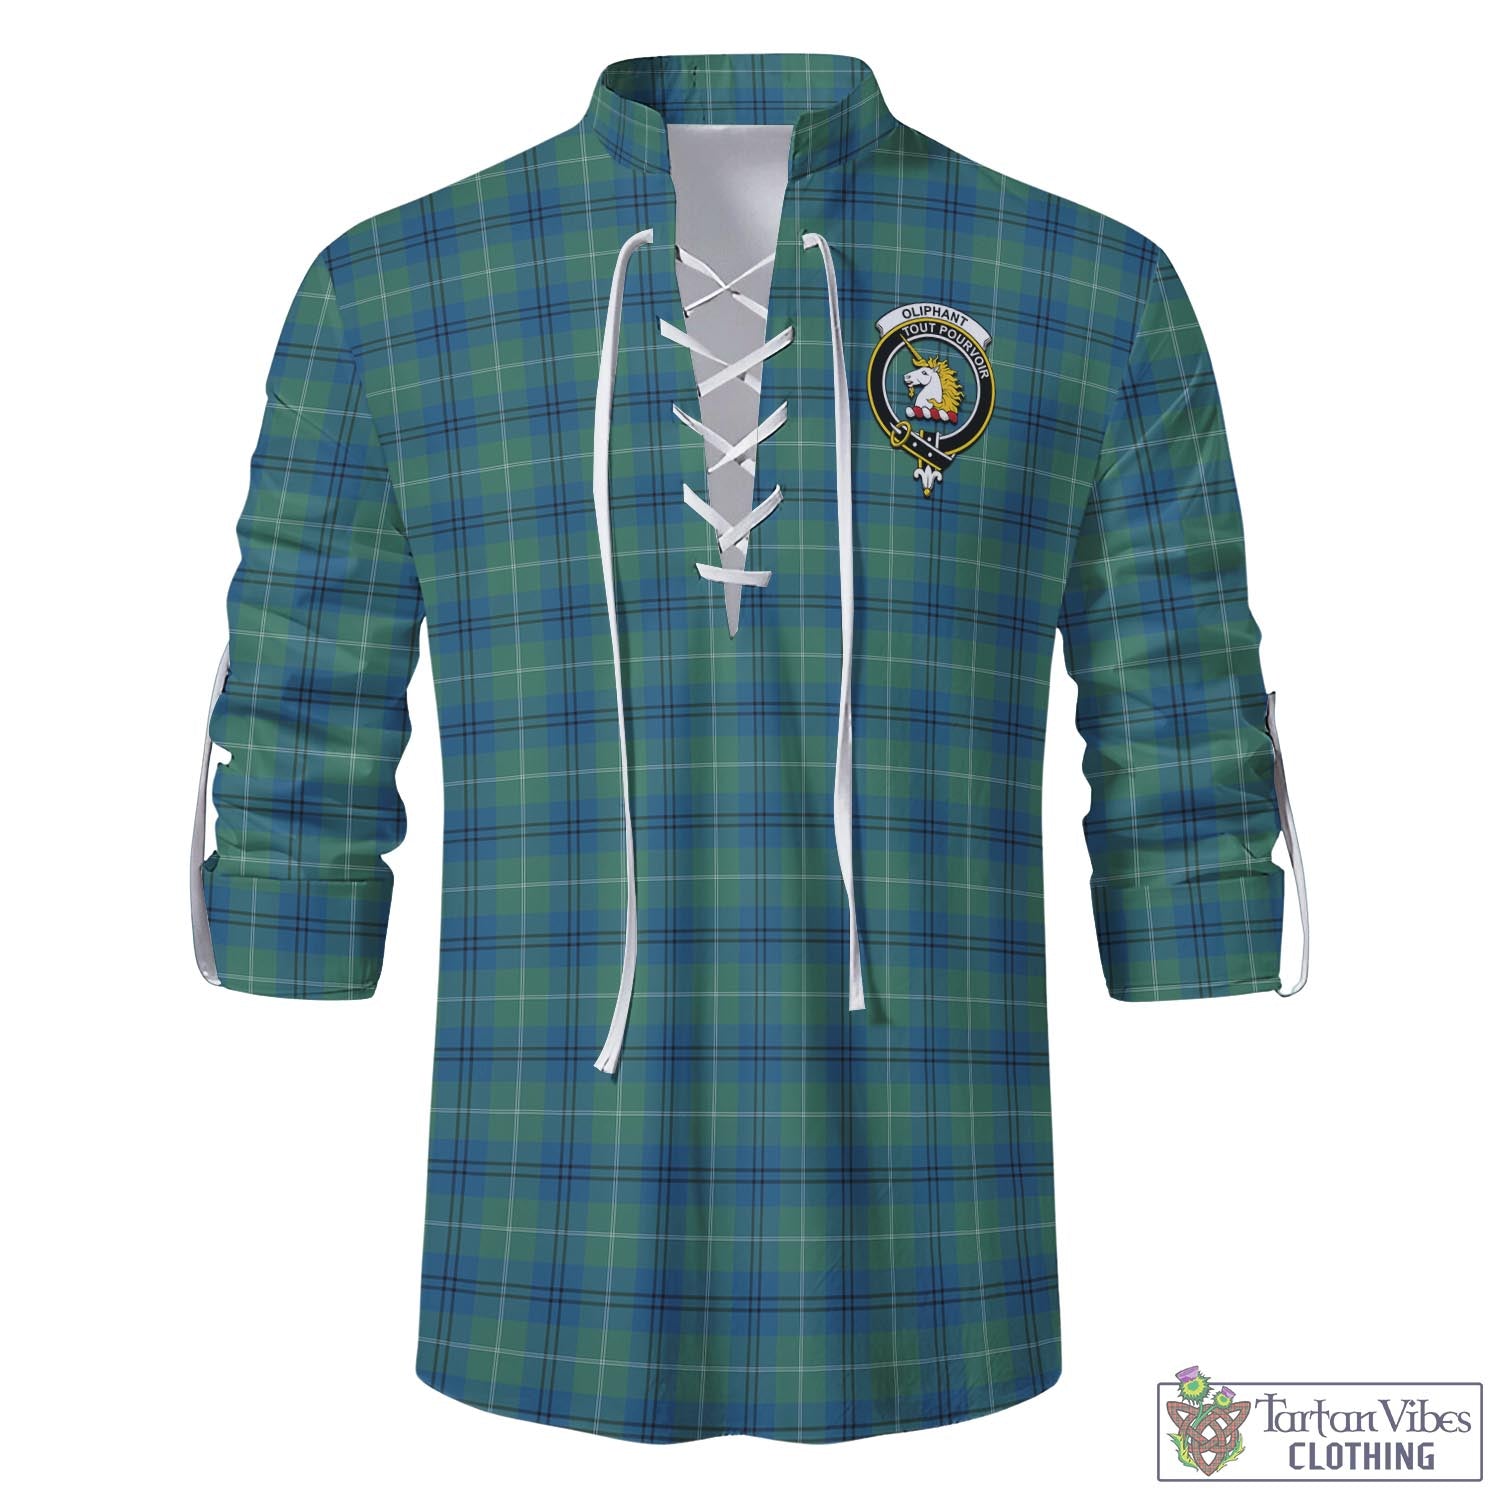 Tartan Vibes Clothing Oliphant Ancient Tartan Men's Scottish Traditional Jacobite Ghillie Kilt Shirt with Family Crest